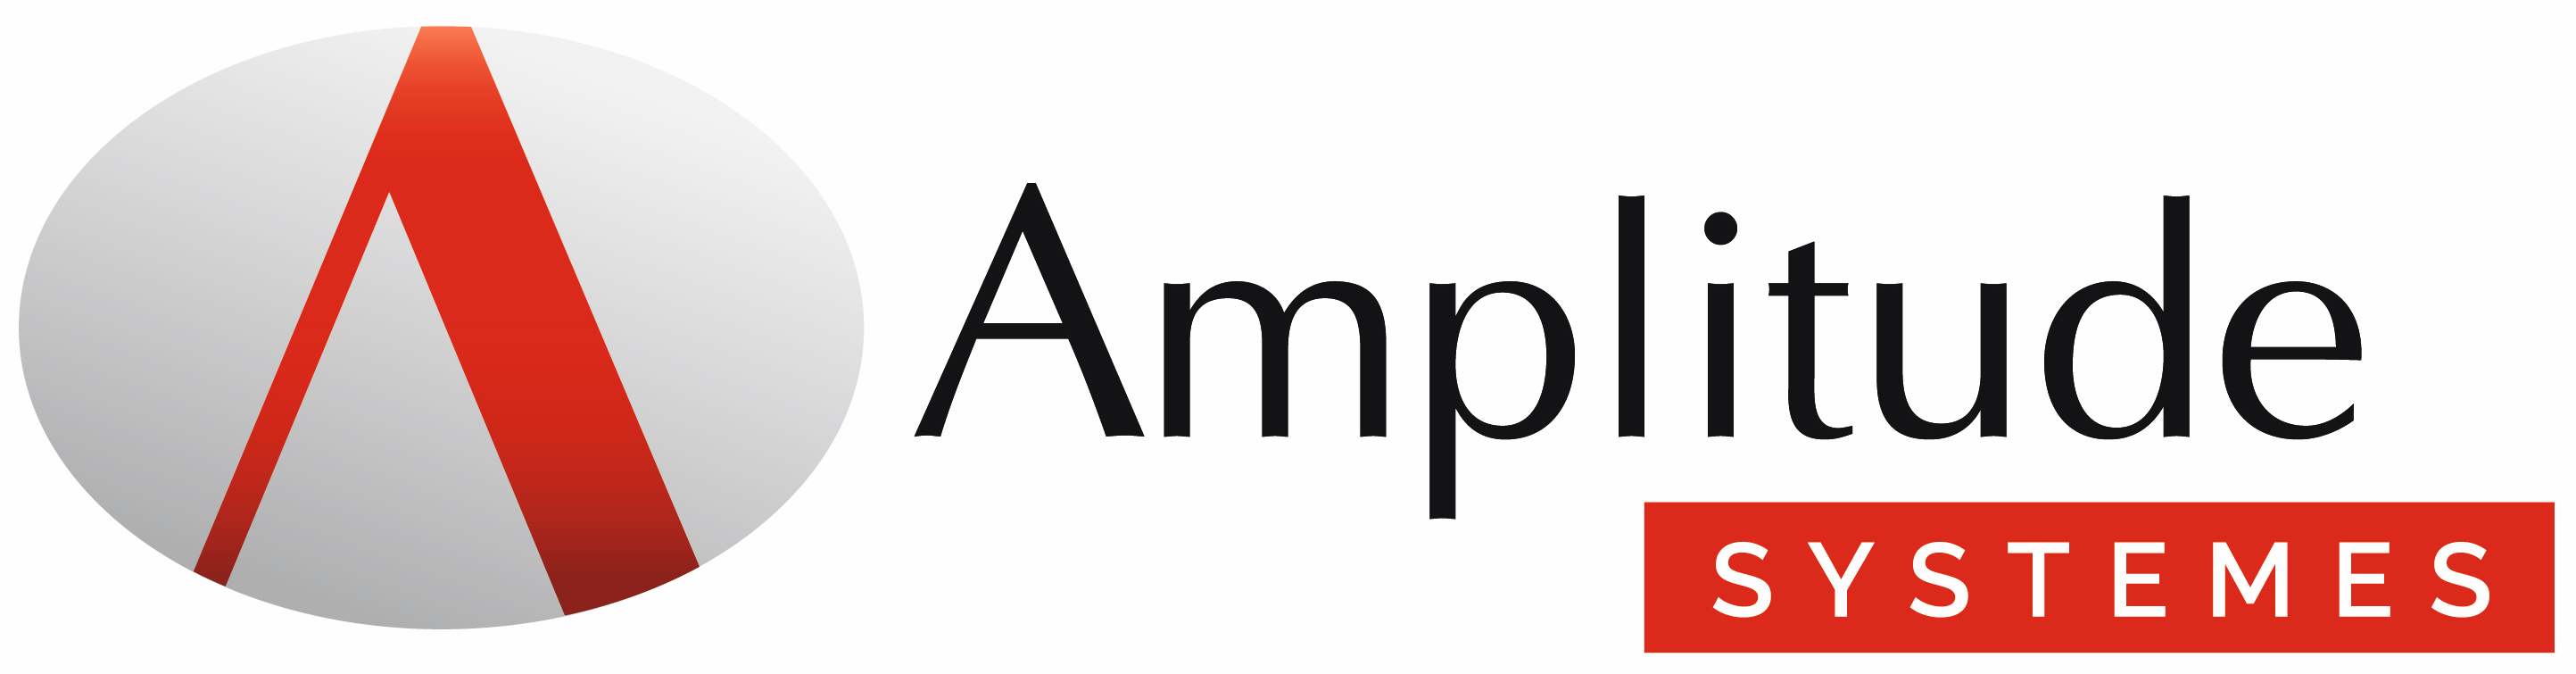 logo_amplitude-systemes